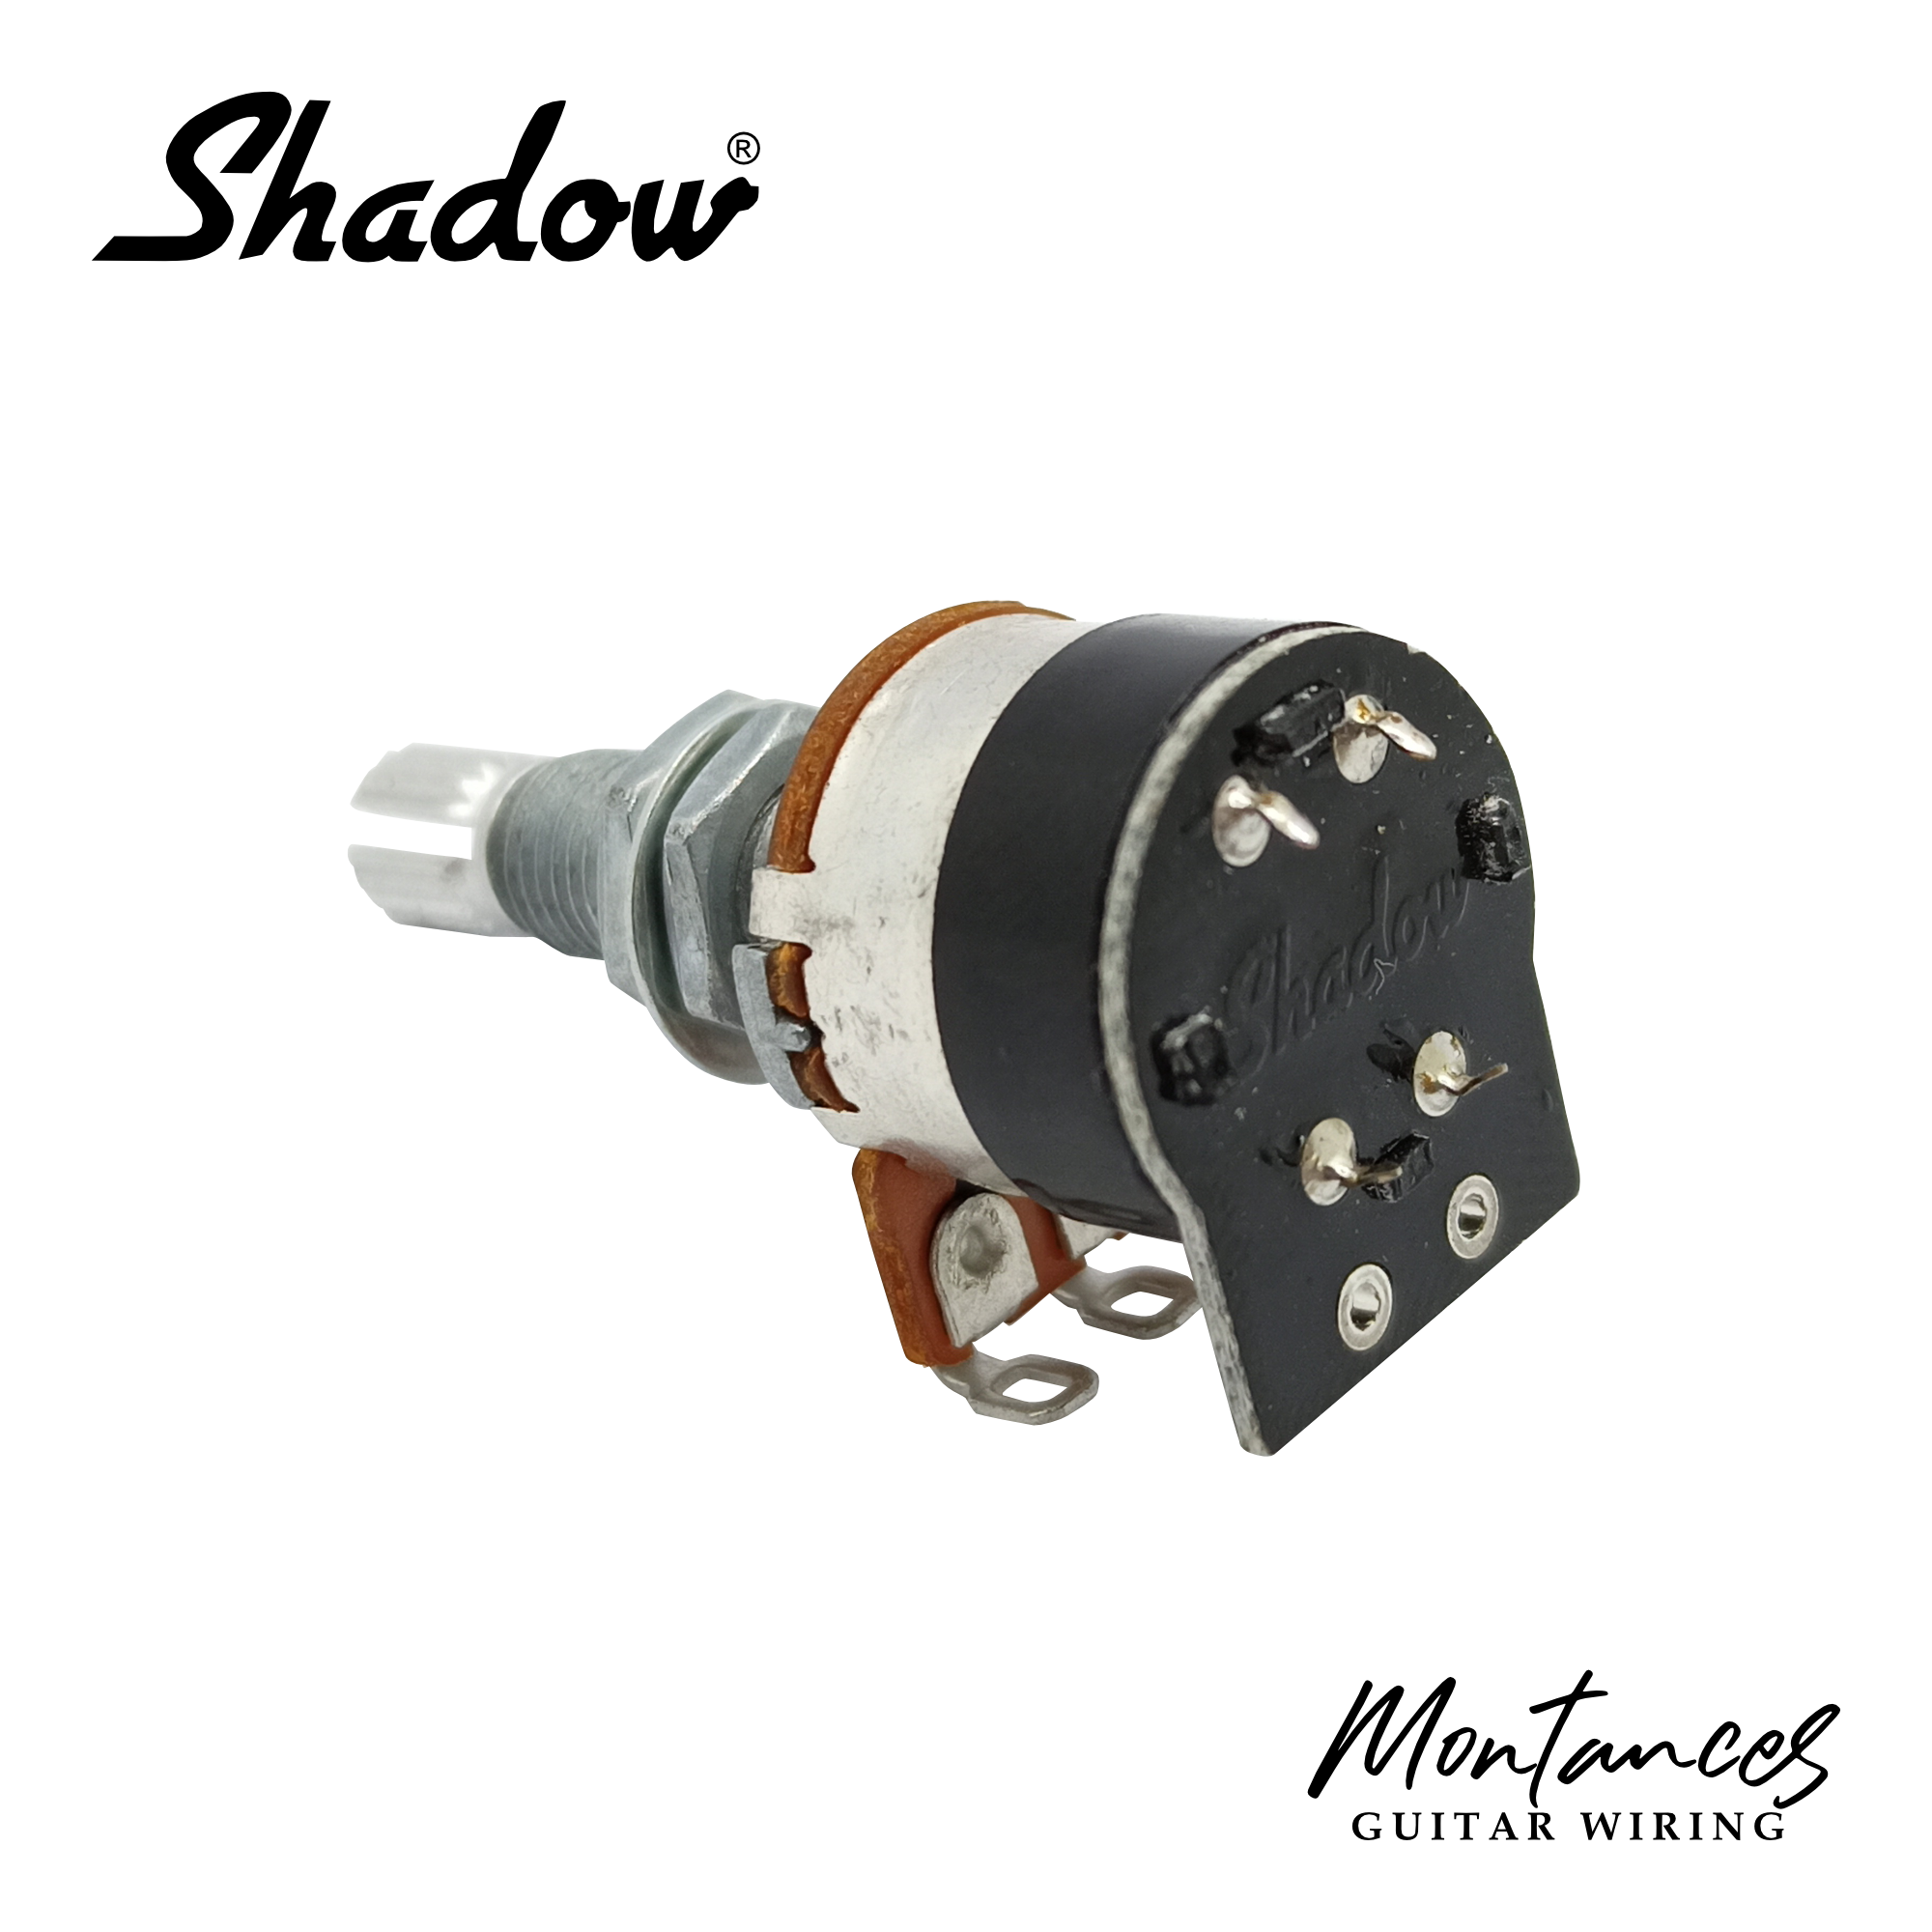 Shadow® Kill Pot 2-in-1 function ⅝” Semi-Long Length Potentiometer and Kill Switch